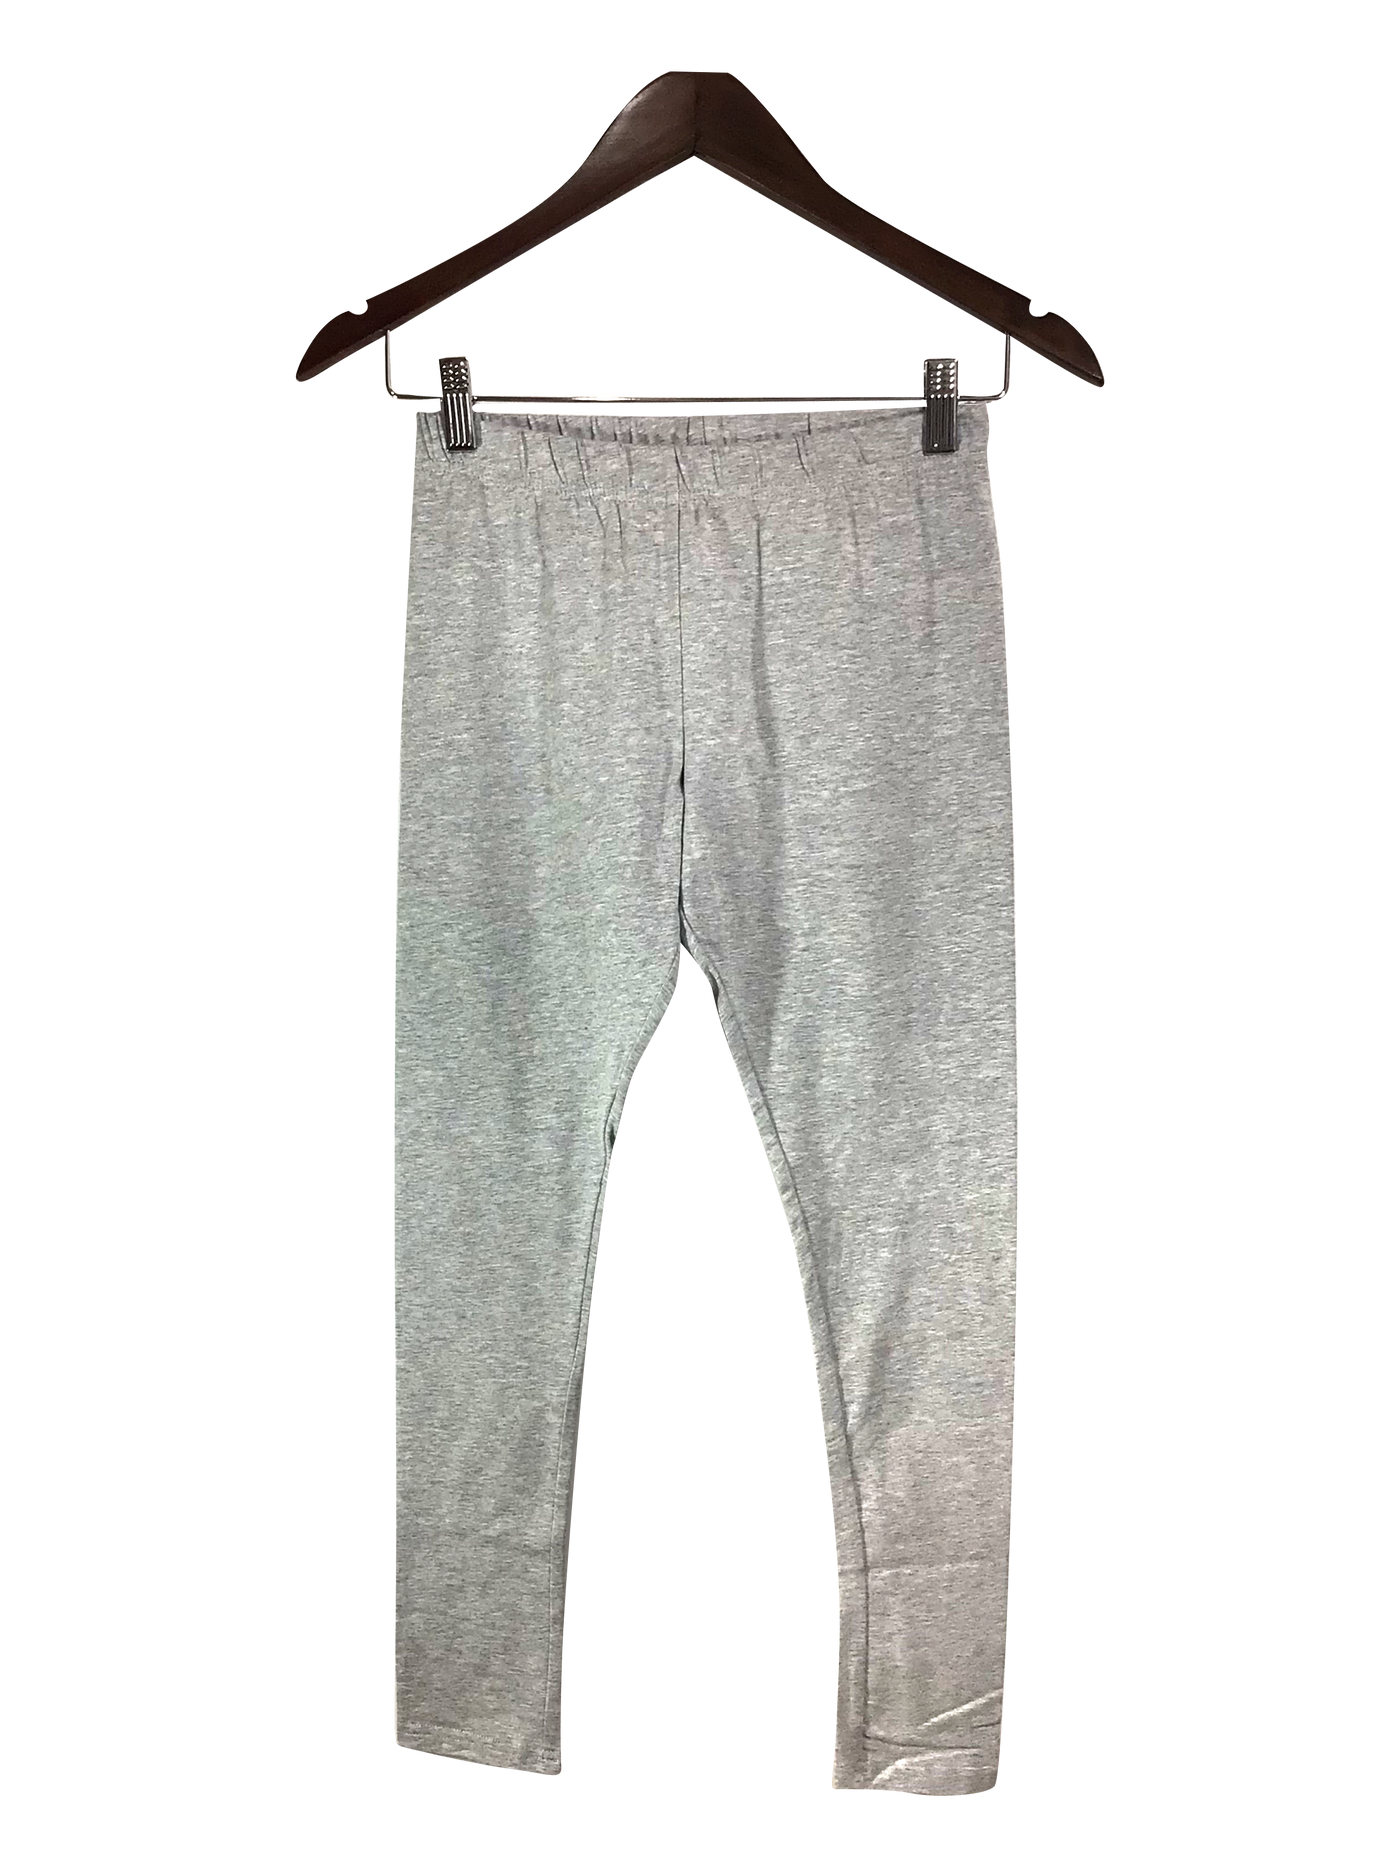 CARTER'S Pant Regular fit in Gray - Size 14 | 6.99 $ KOOP